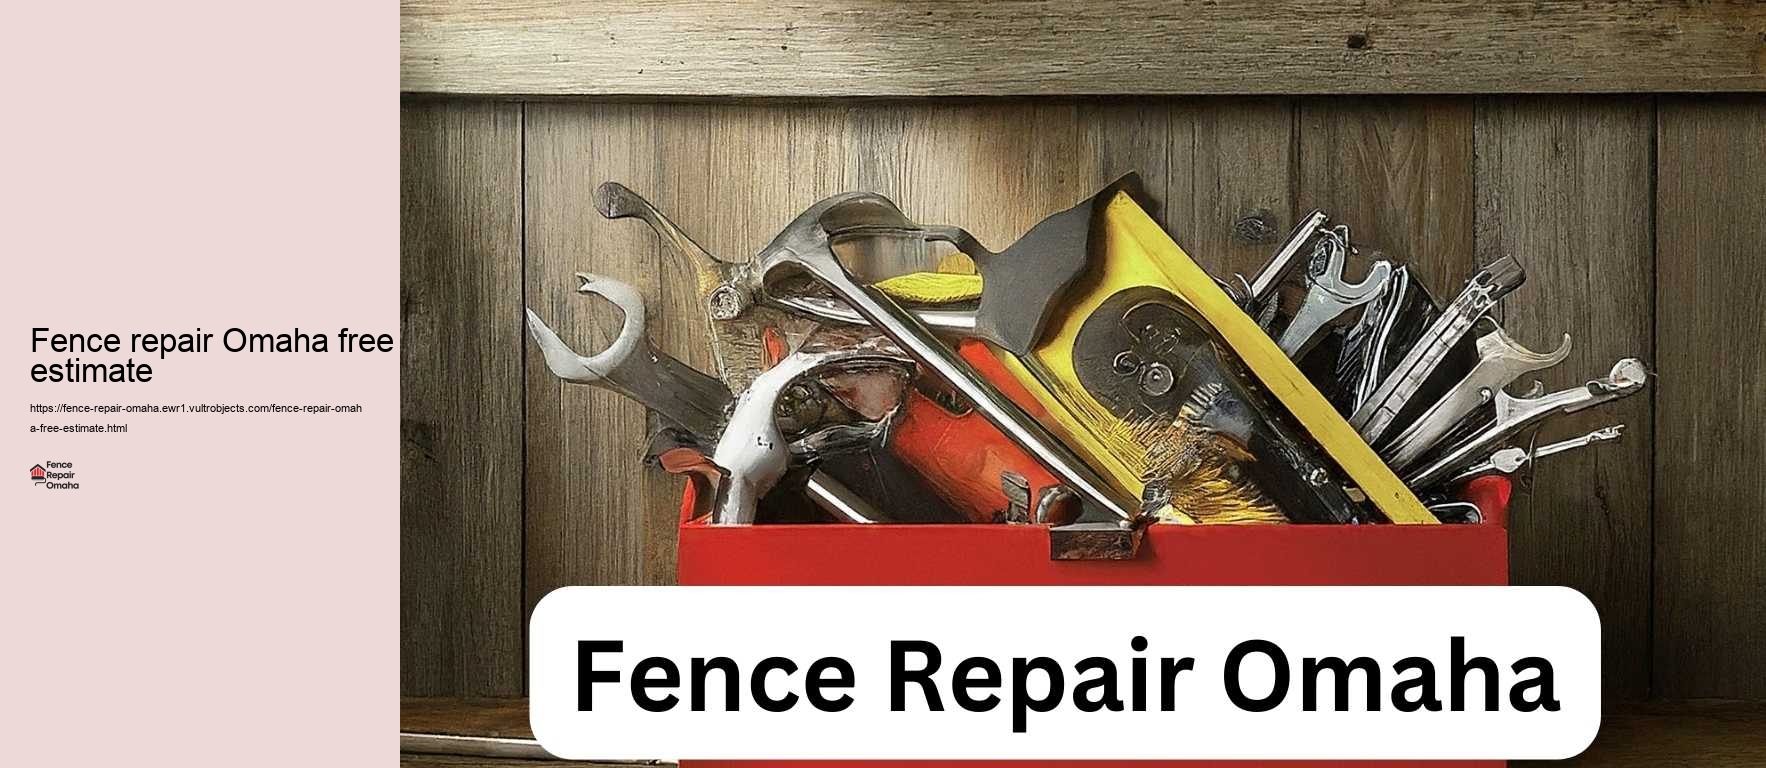 Fence repair Omaha free estimate